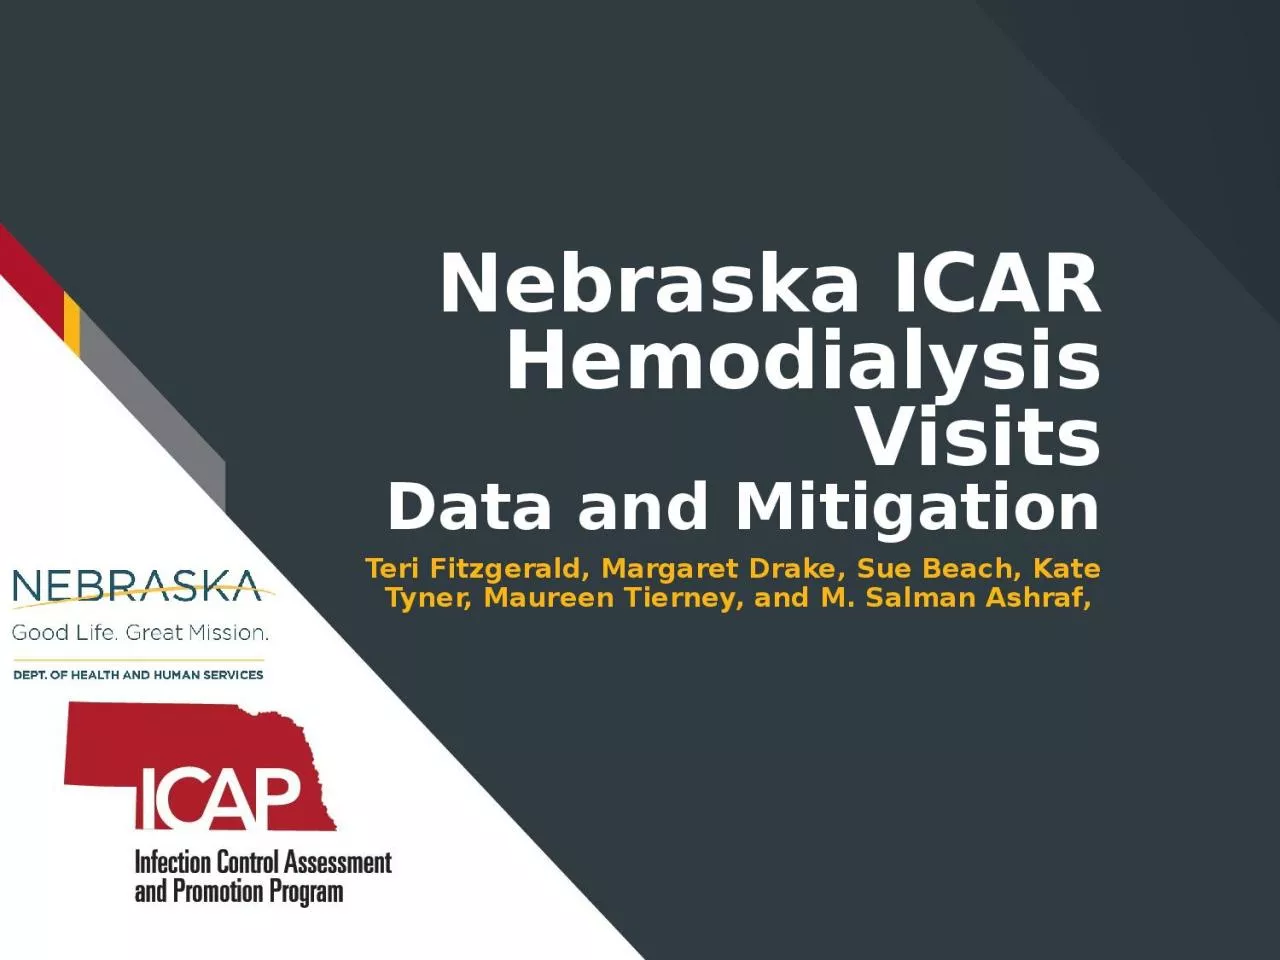 Nebraska ICAR Hemodialysis Visits